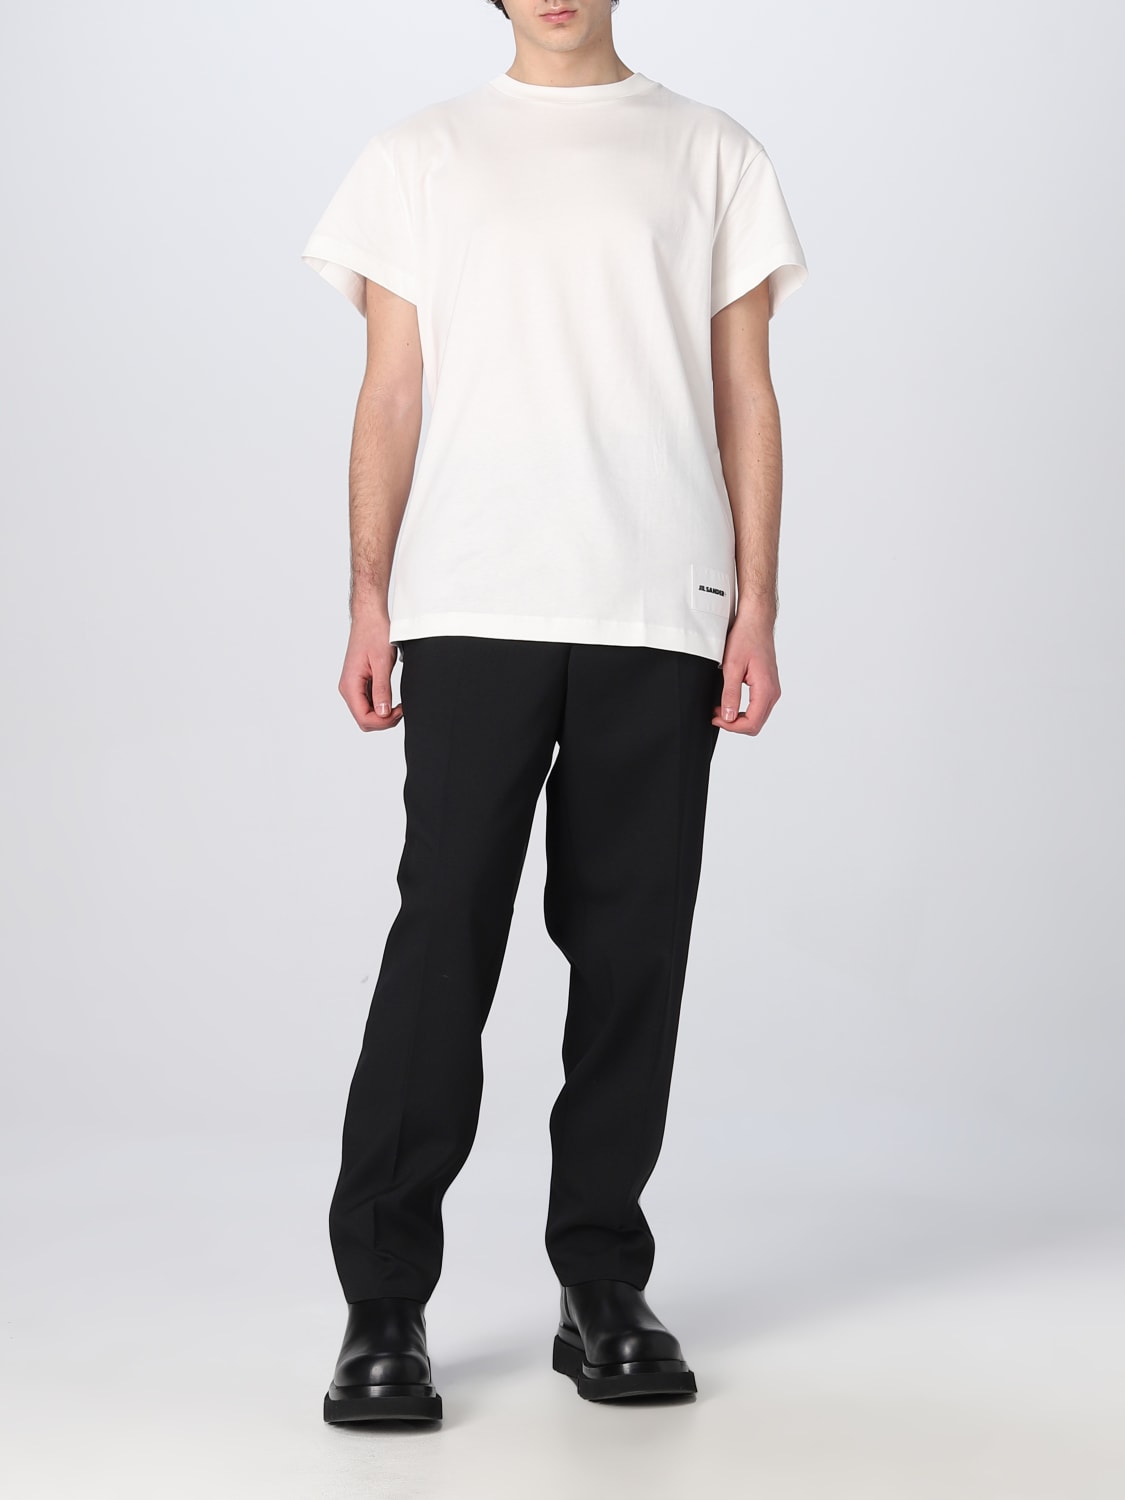 Jil Sander Outlet: t-shirt for man - White | Jil Sander t-shirt